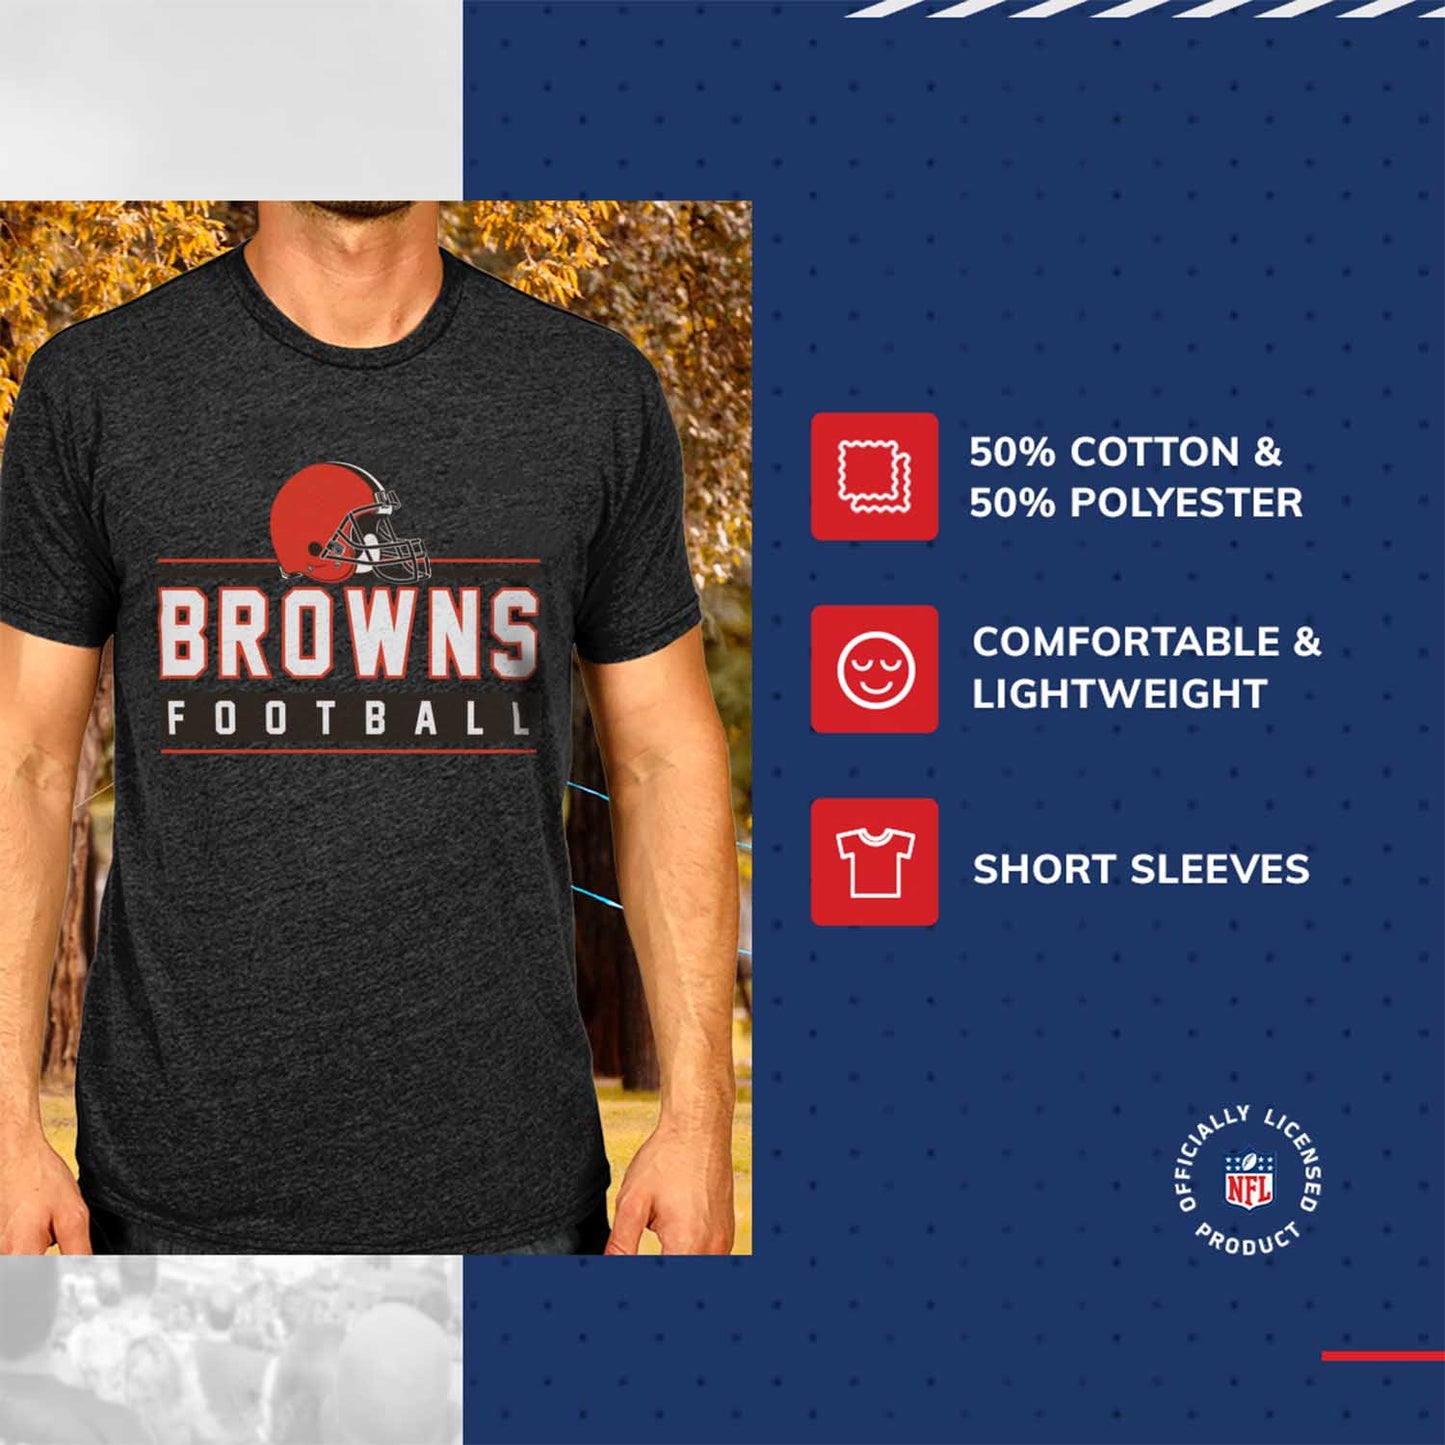 Cleveland Browns NFL Adult MVP True Fan T-Shirt - Charcoal